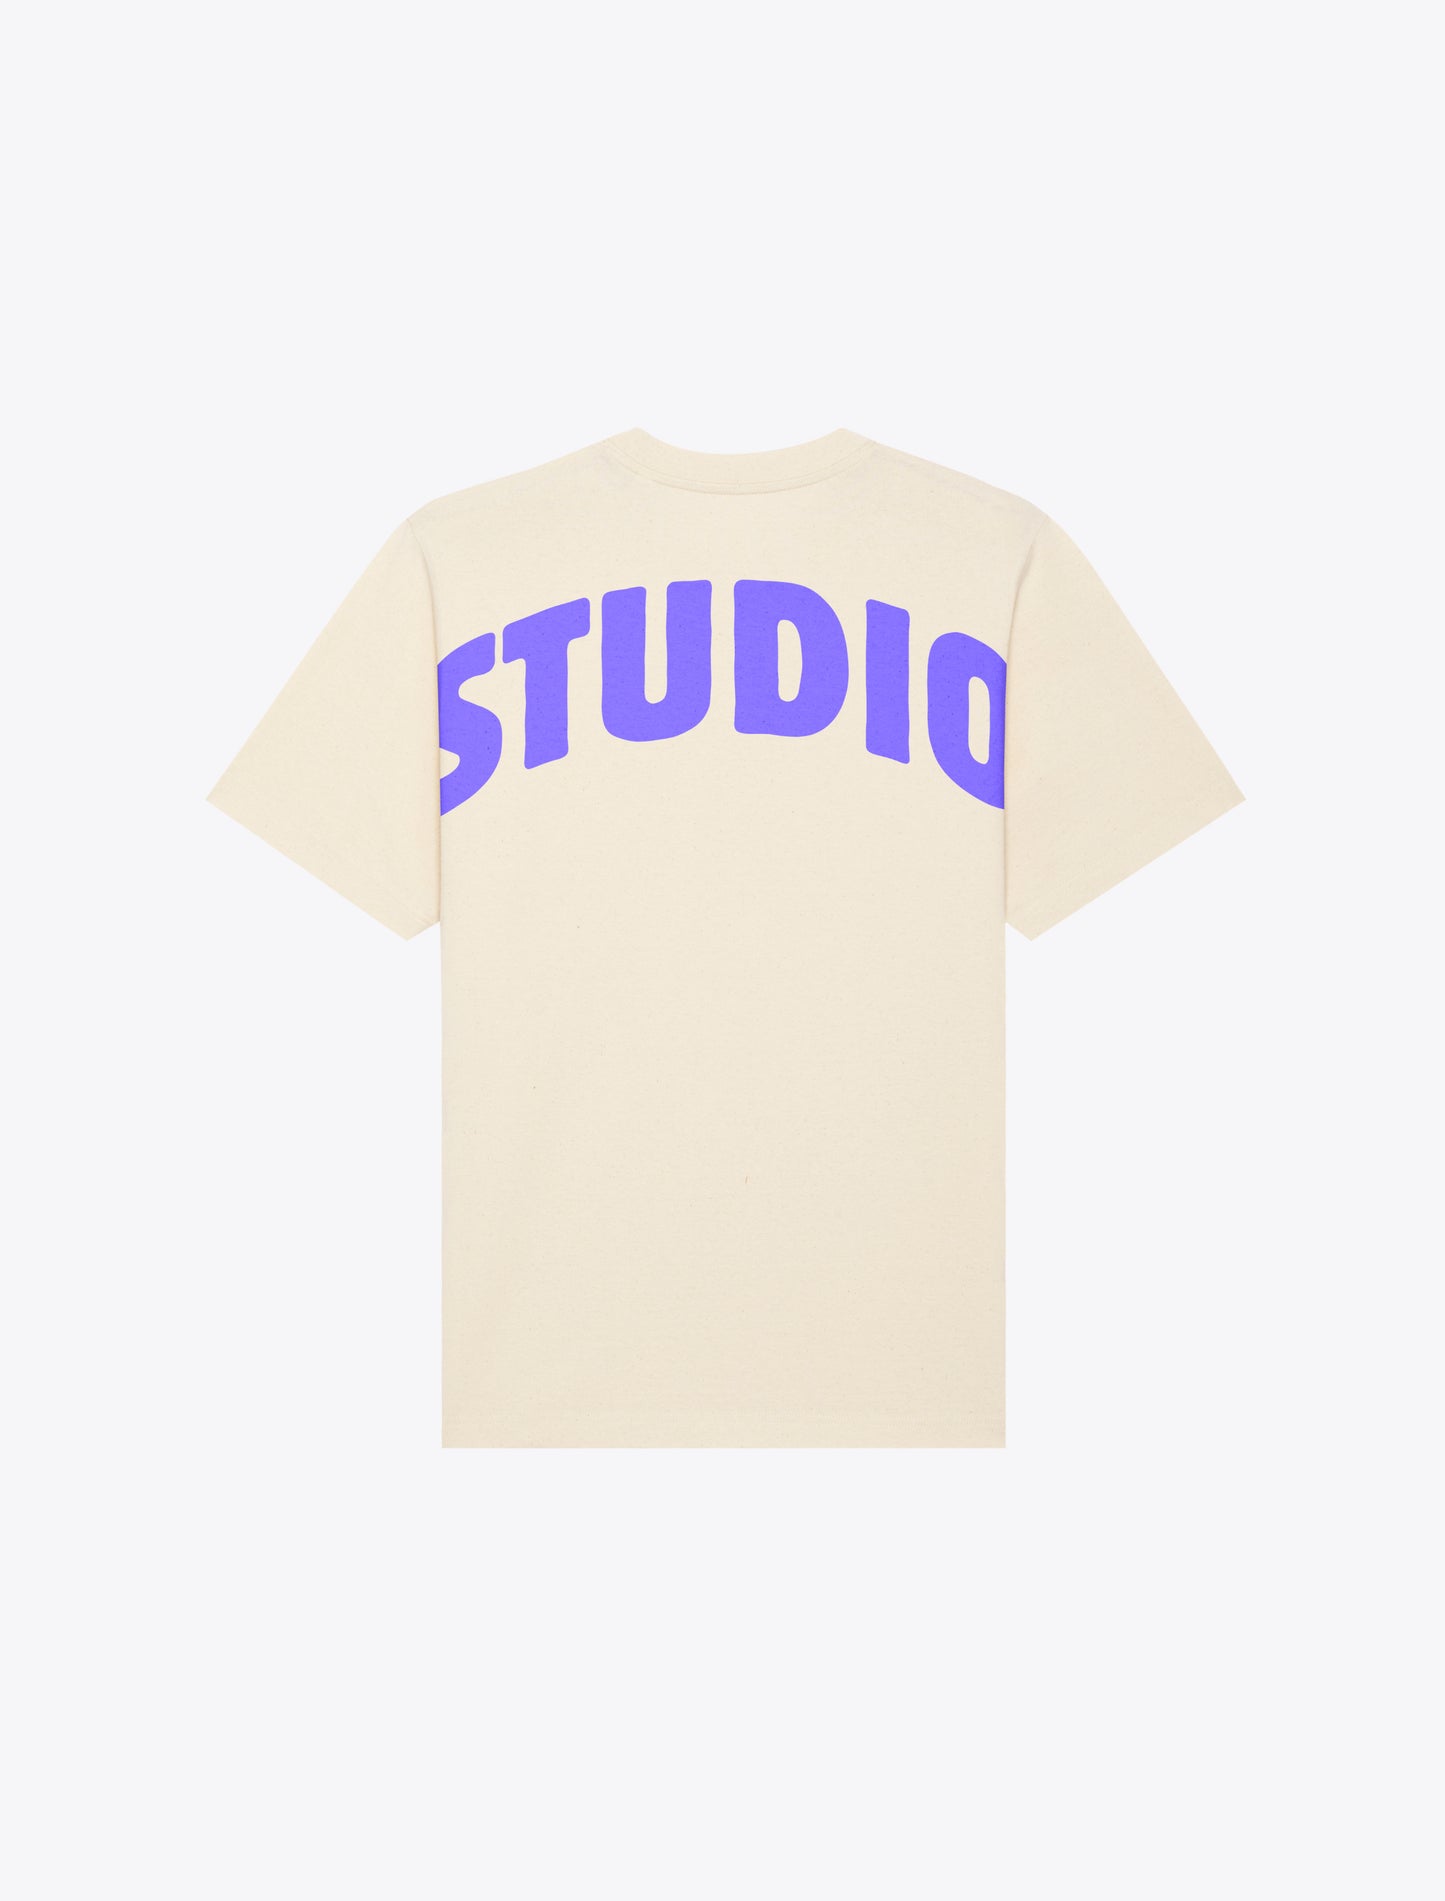 Studio shirt